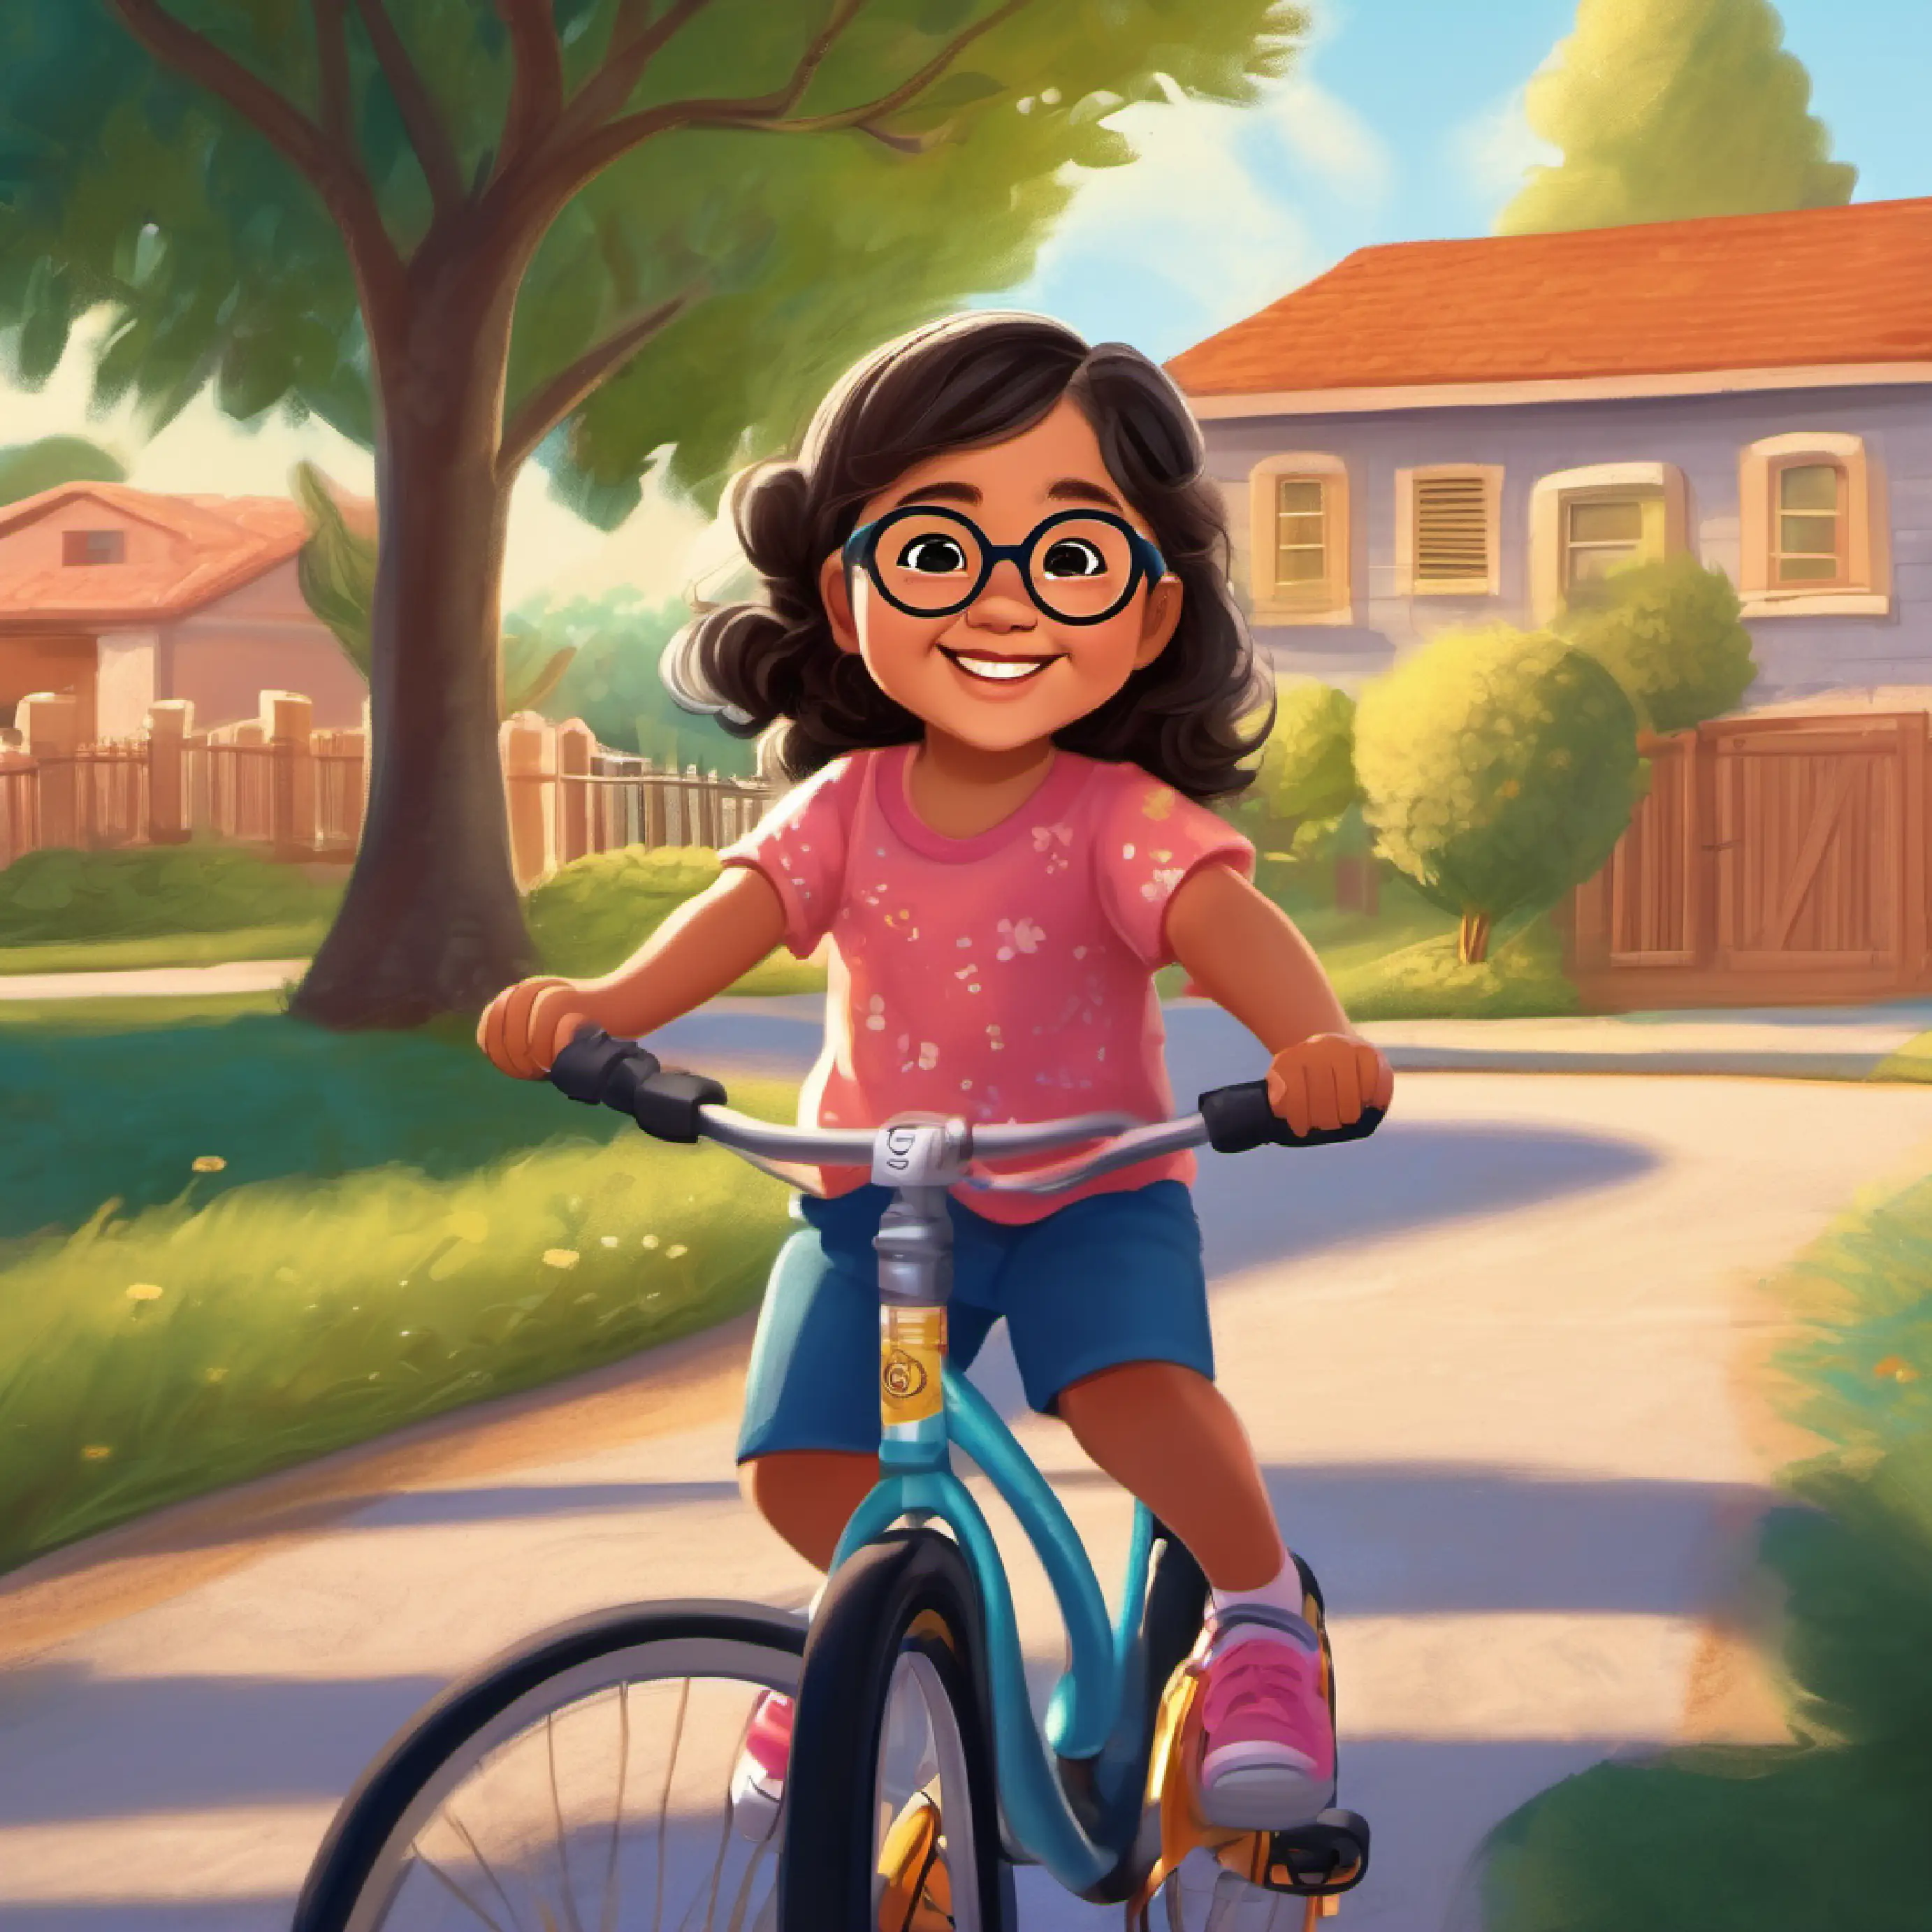 Karen greets her neighbors while riding her bike.